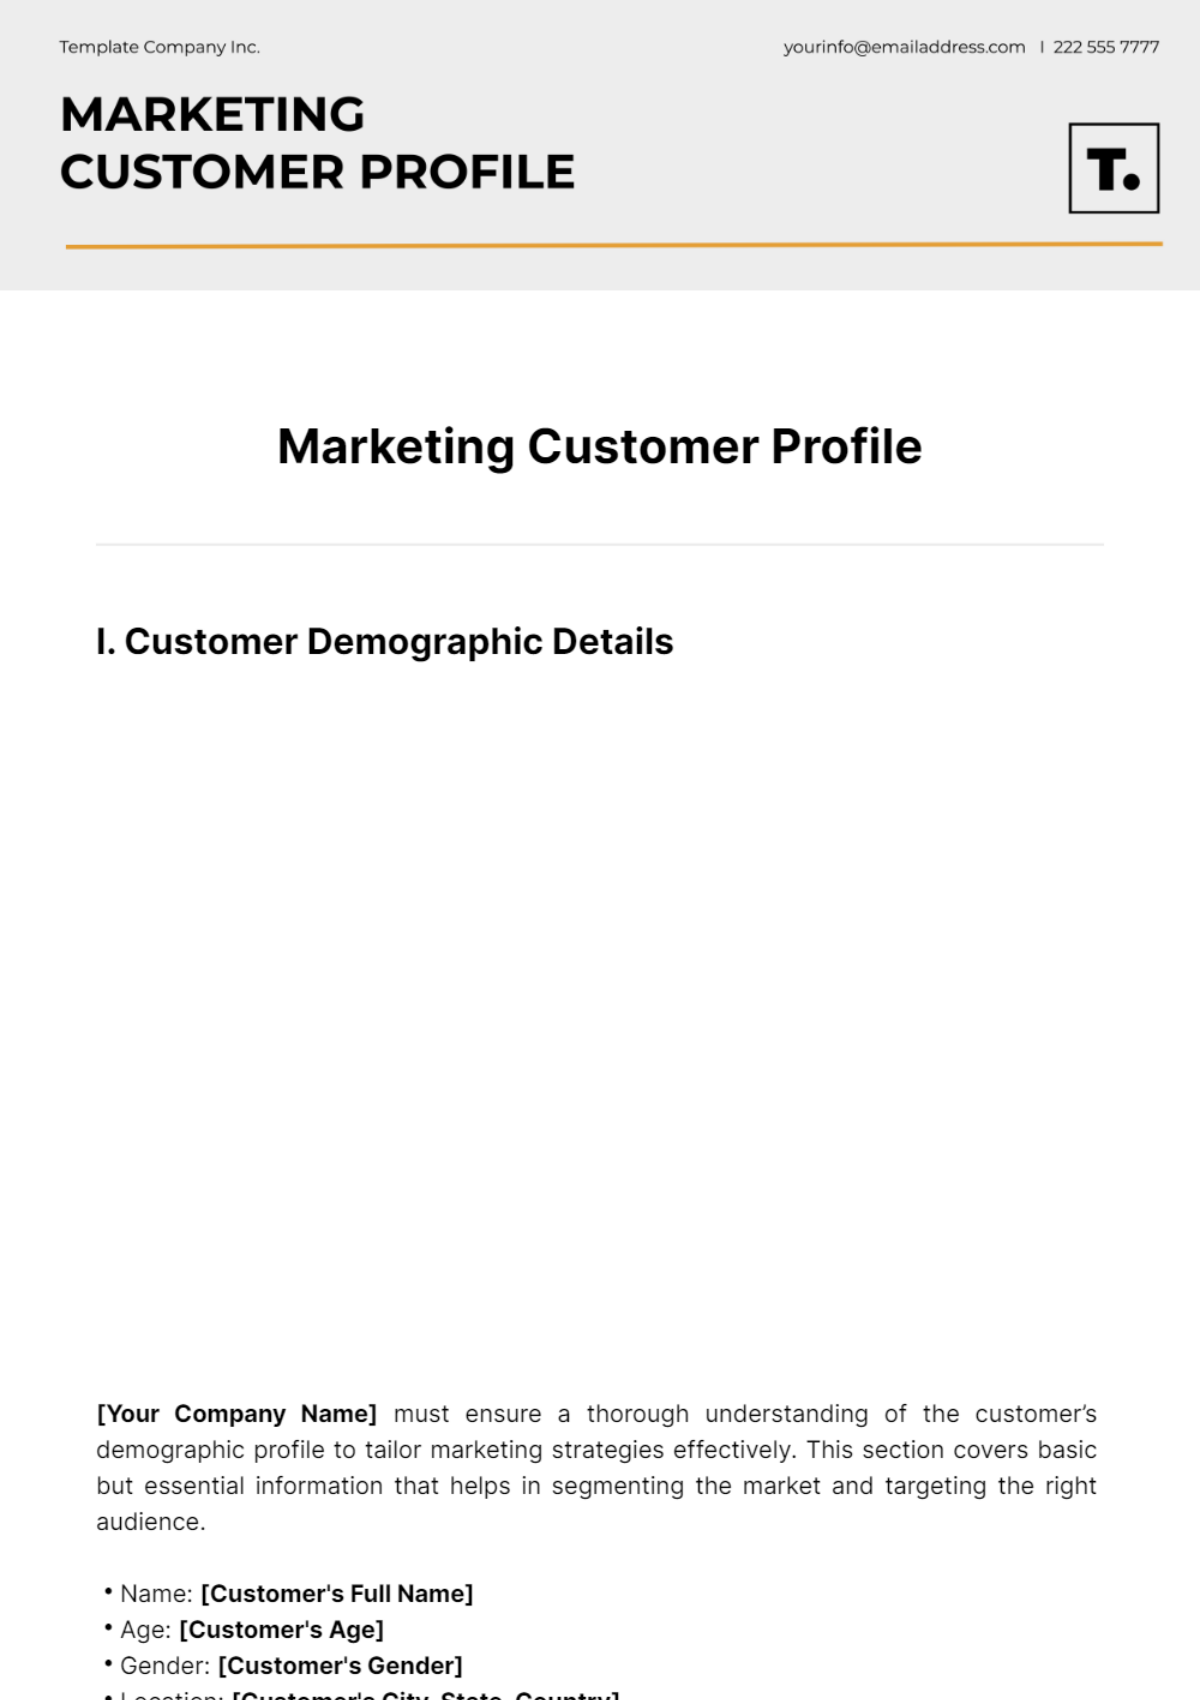 Marketing Customer Profile Template